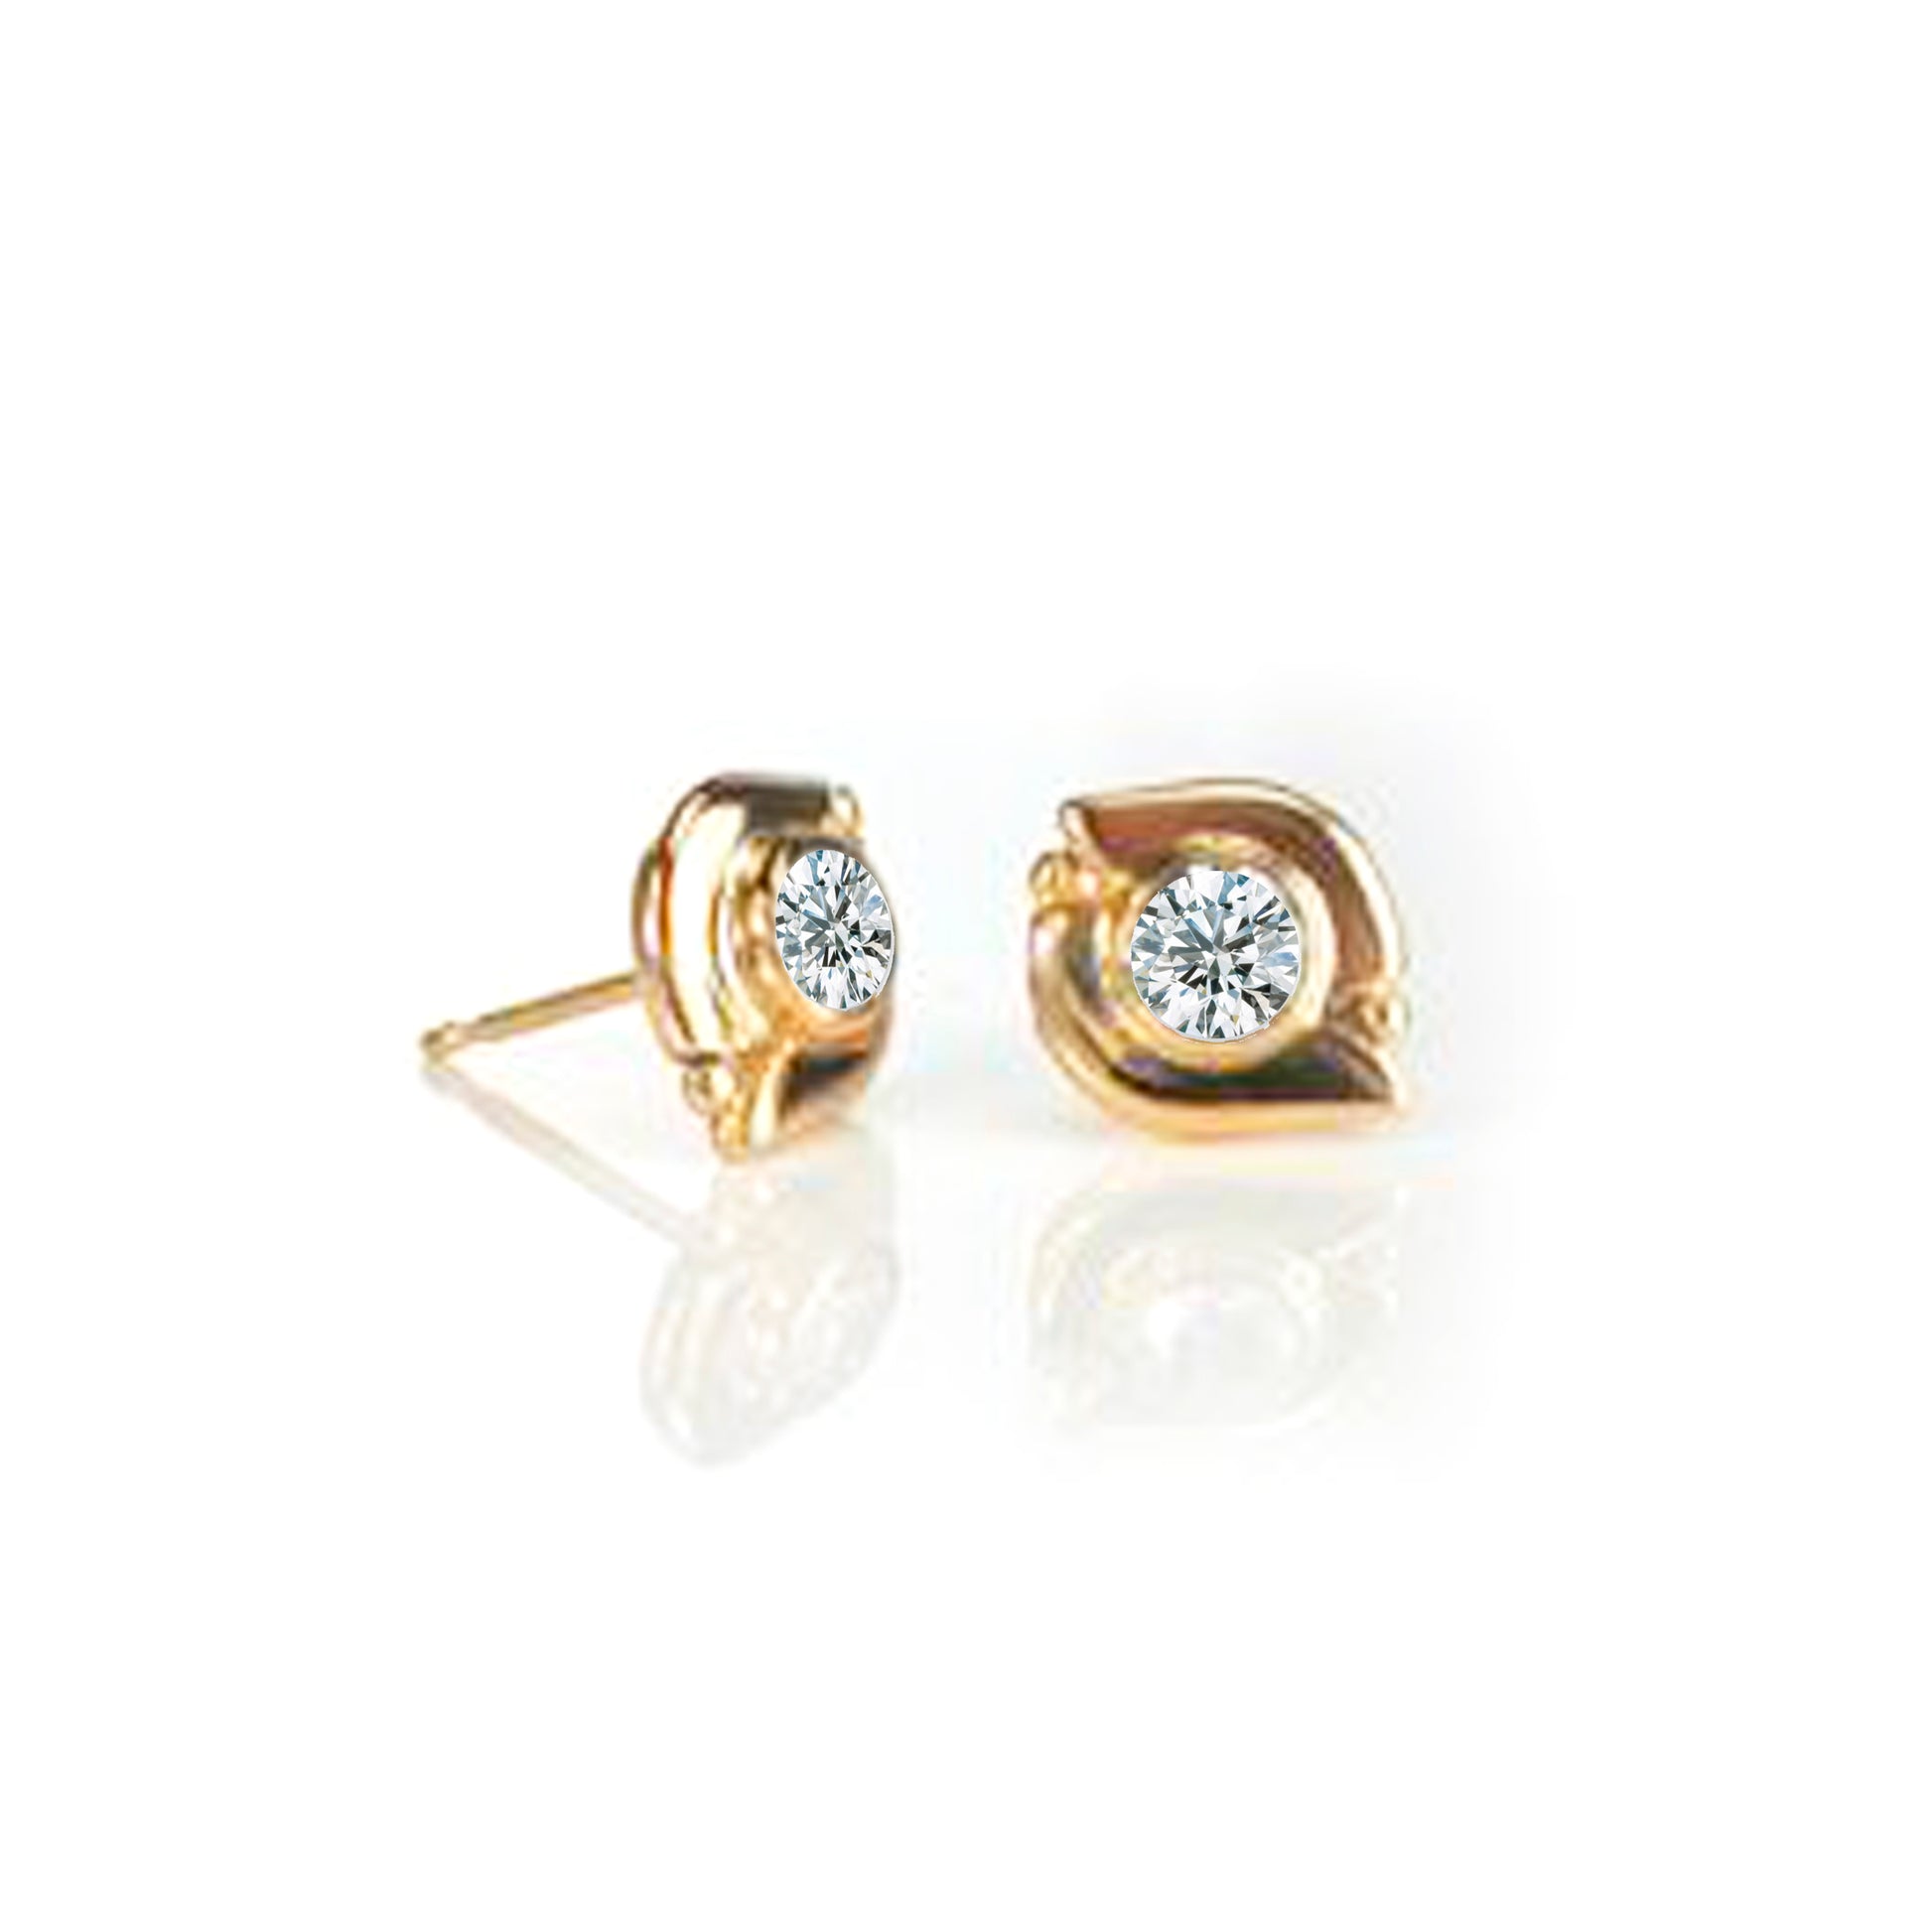 Custom white and yellow gold, diamond earrings, by ZEALmetal, Nicole Horlor, in Kingston, ON, Canada